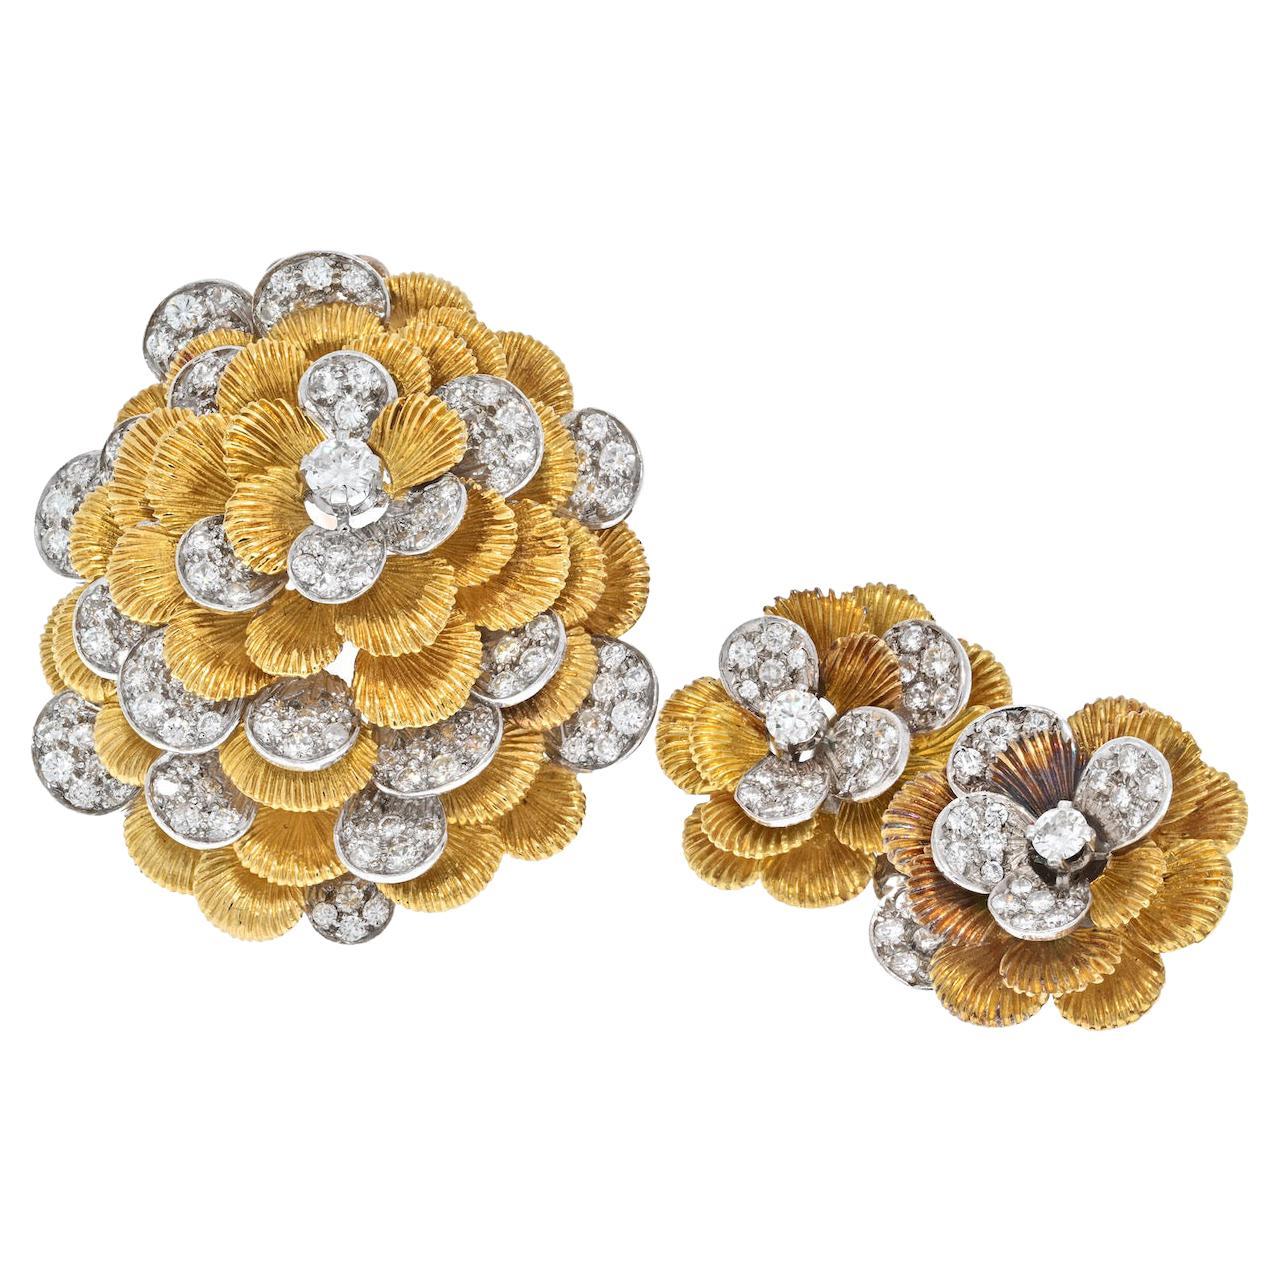 Kutchinsky Platinum & 18K Yellow Gold Diamond Brooch And Earrings Jewelry Set